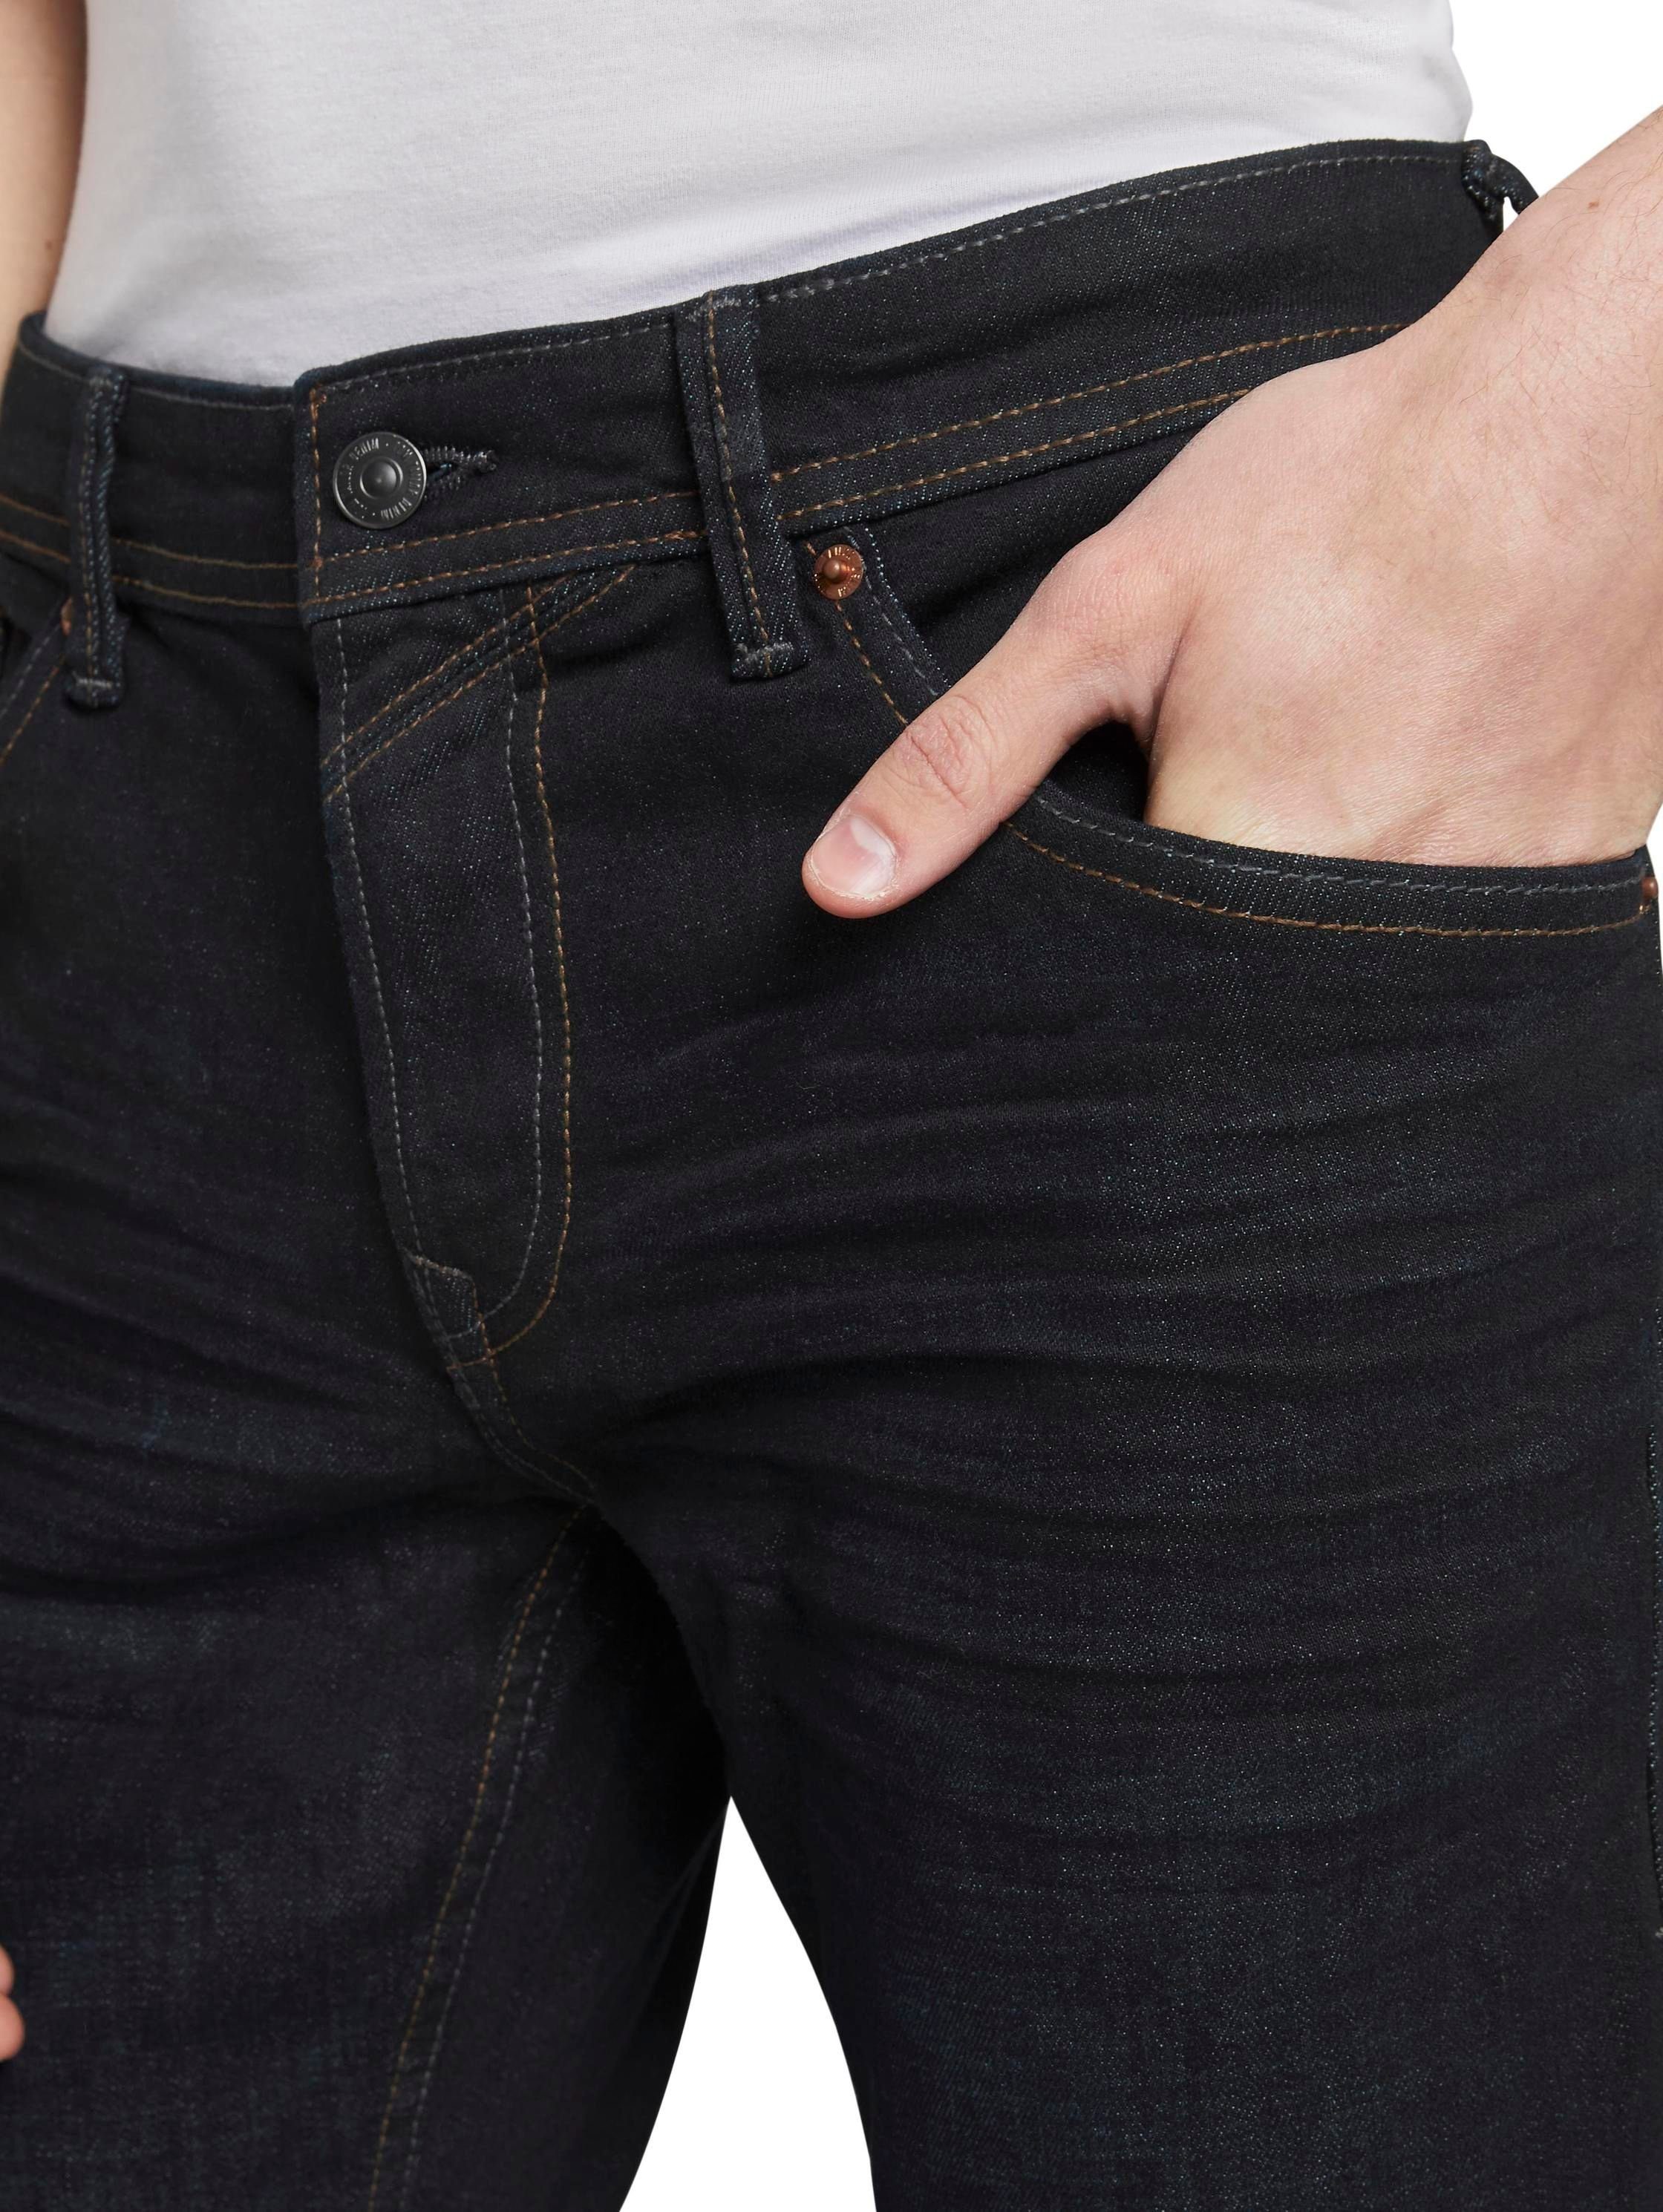 TAILOR Denim TOM Straight-Jeans